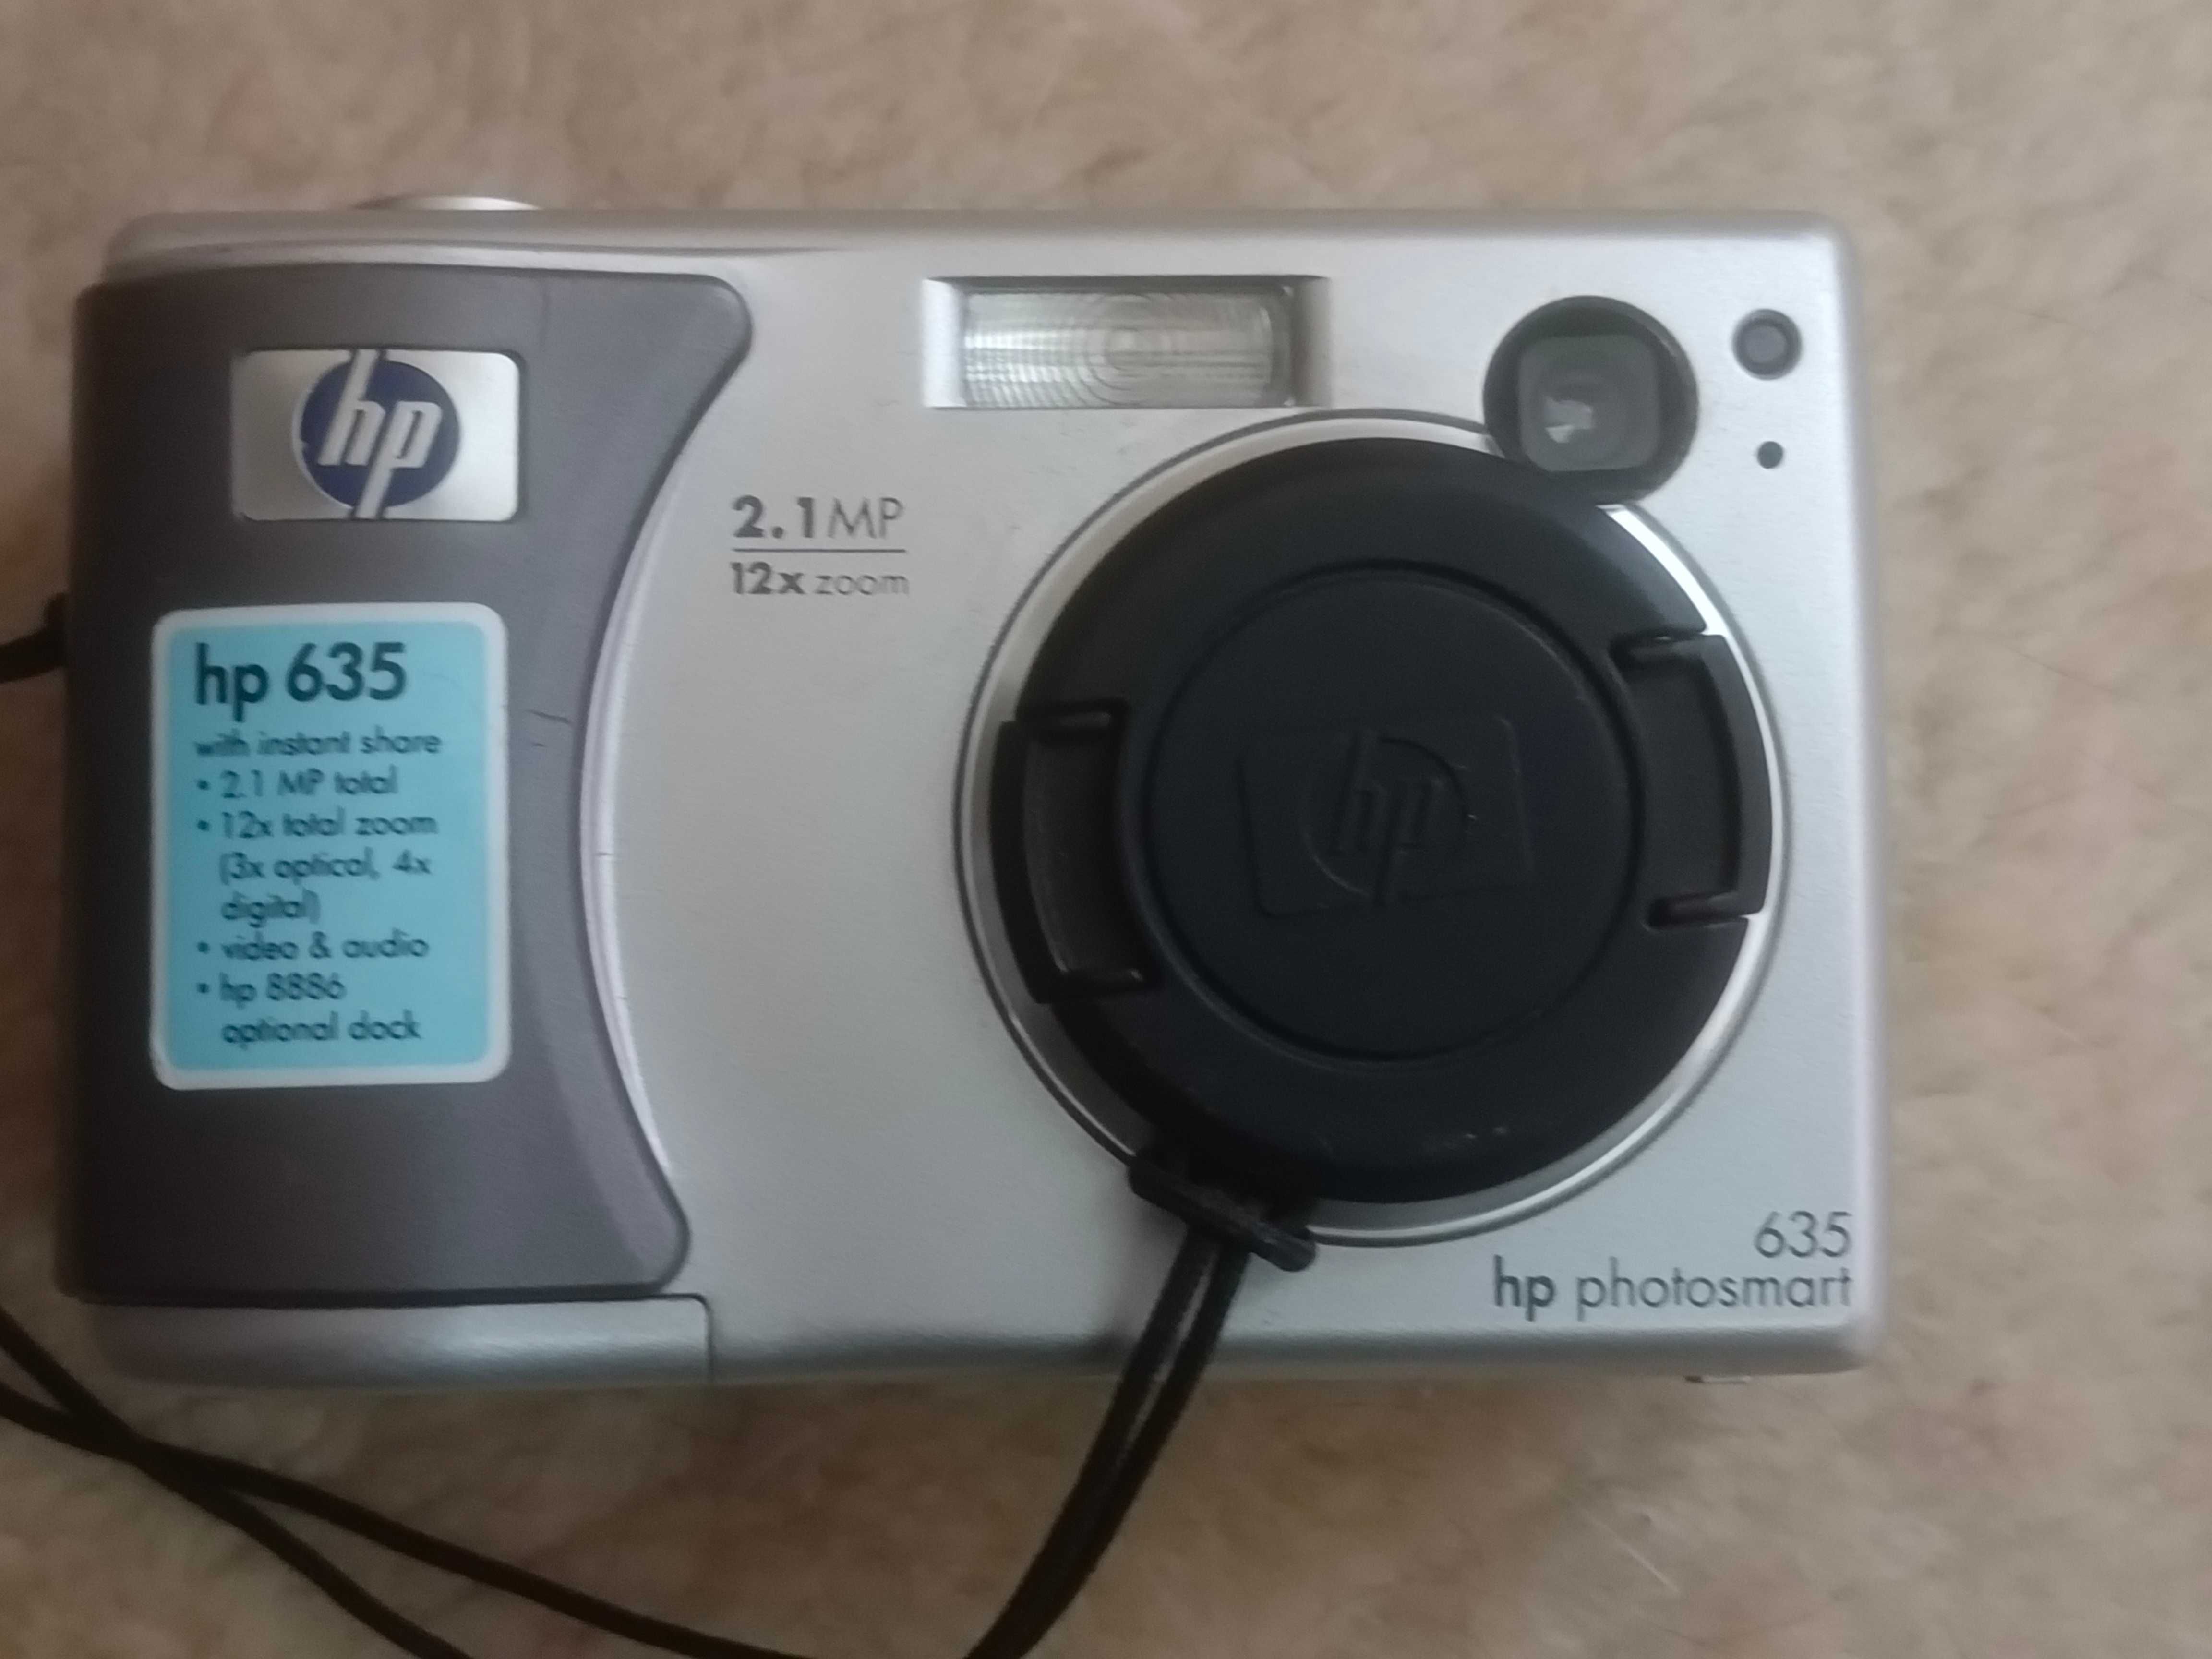 HP photosmart 635